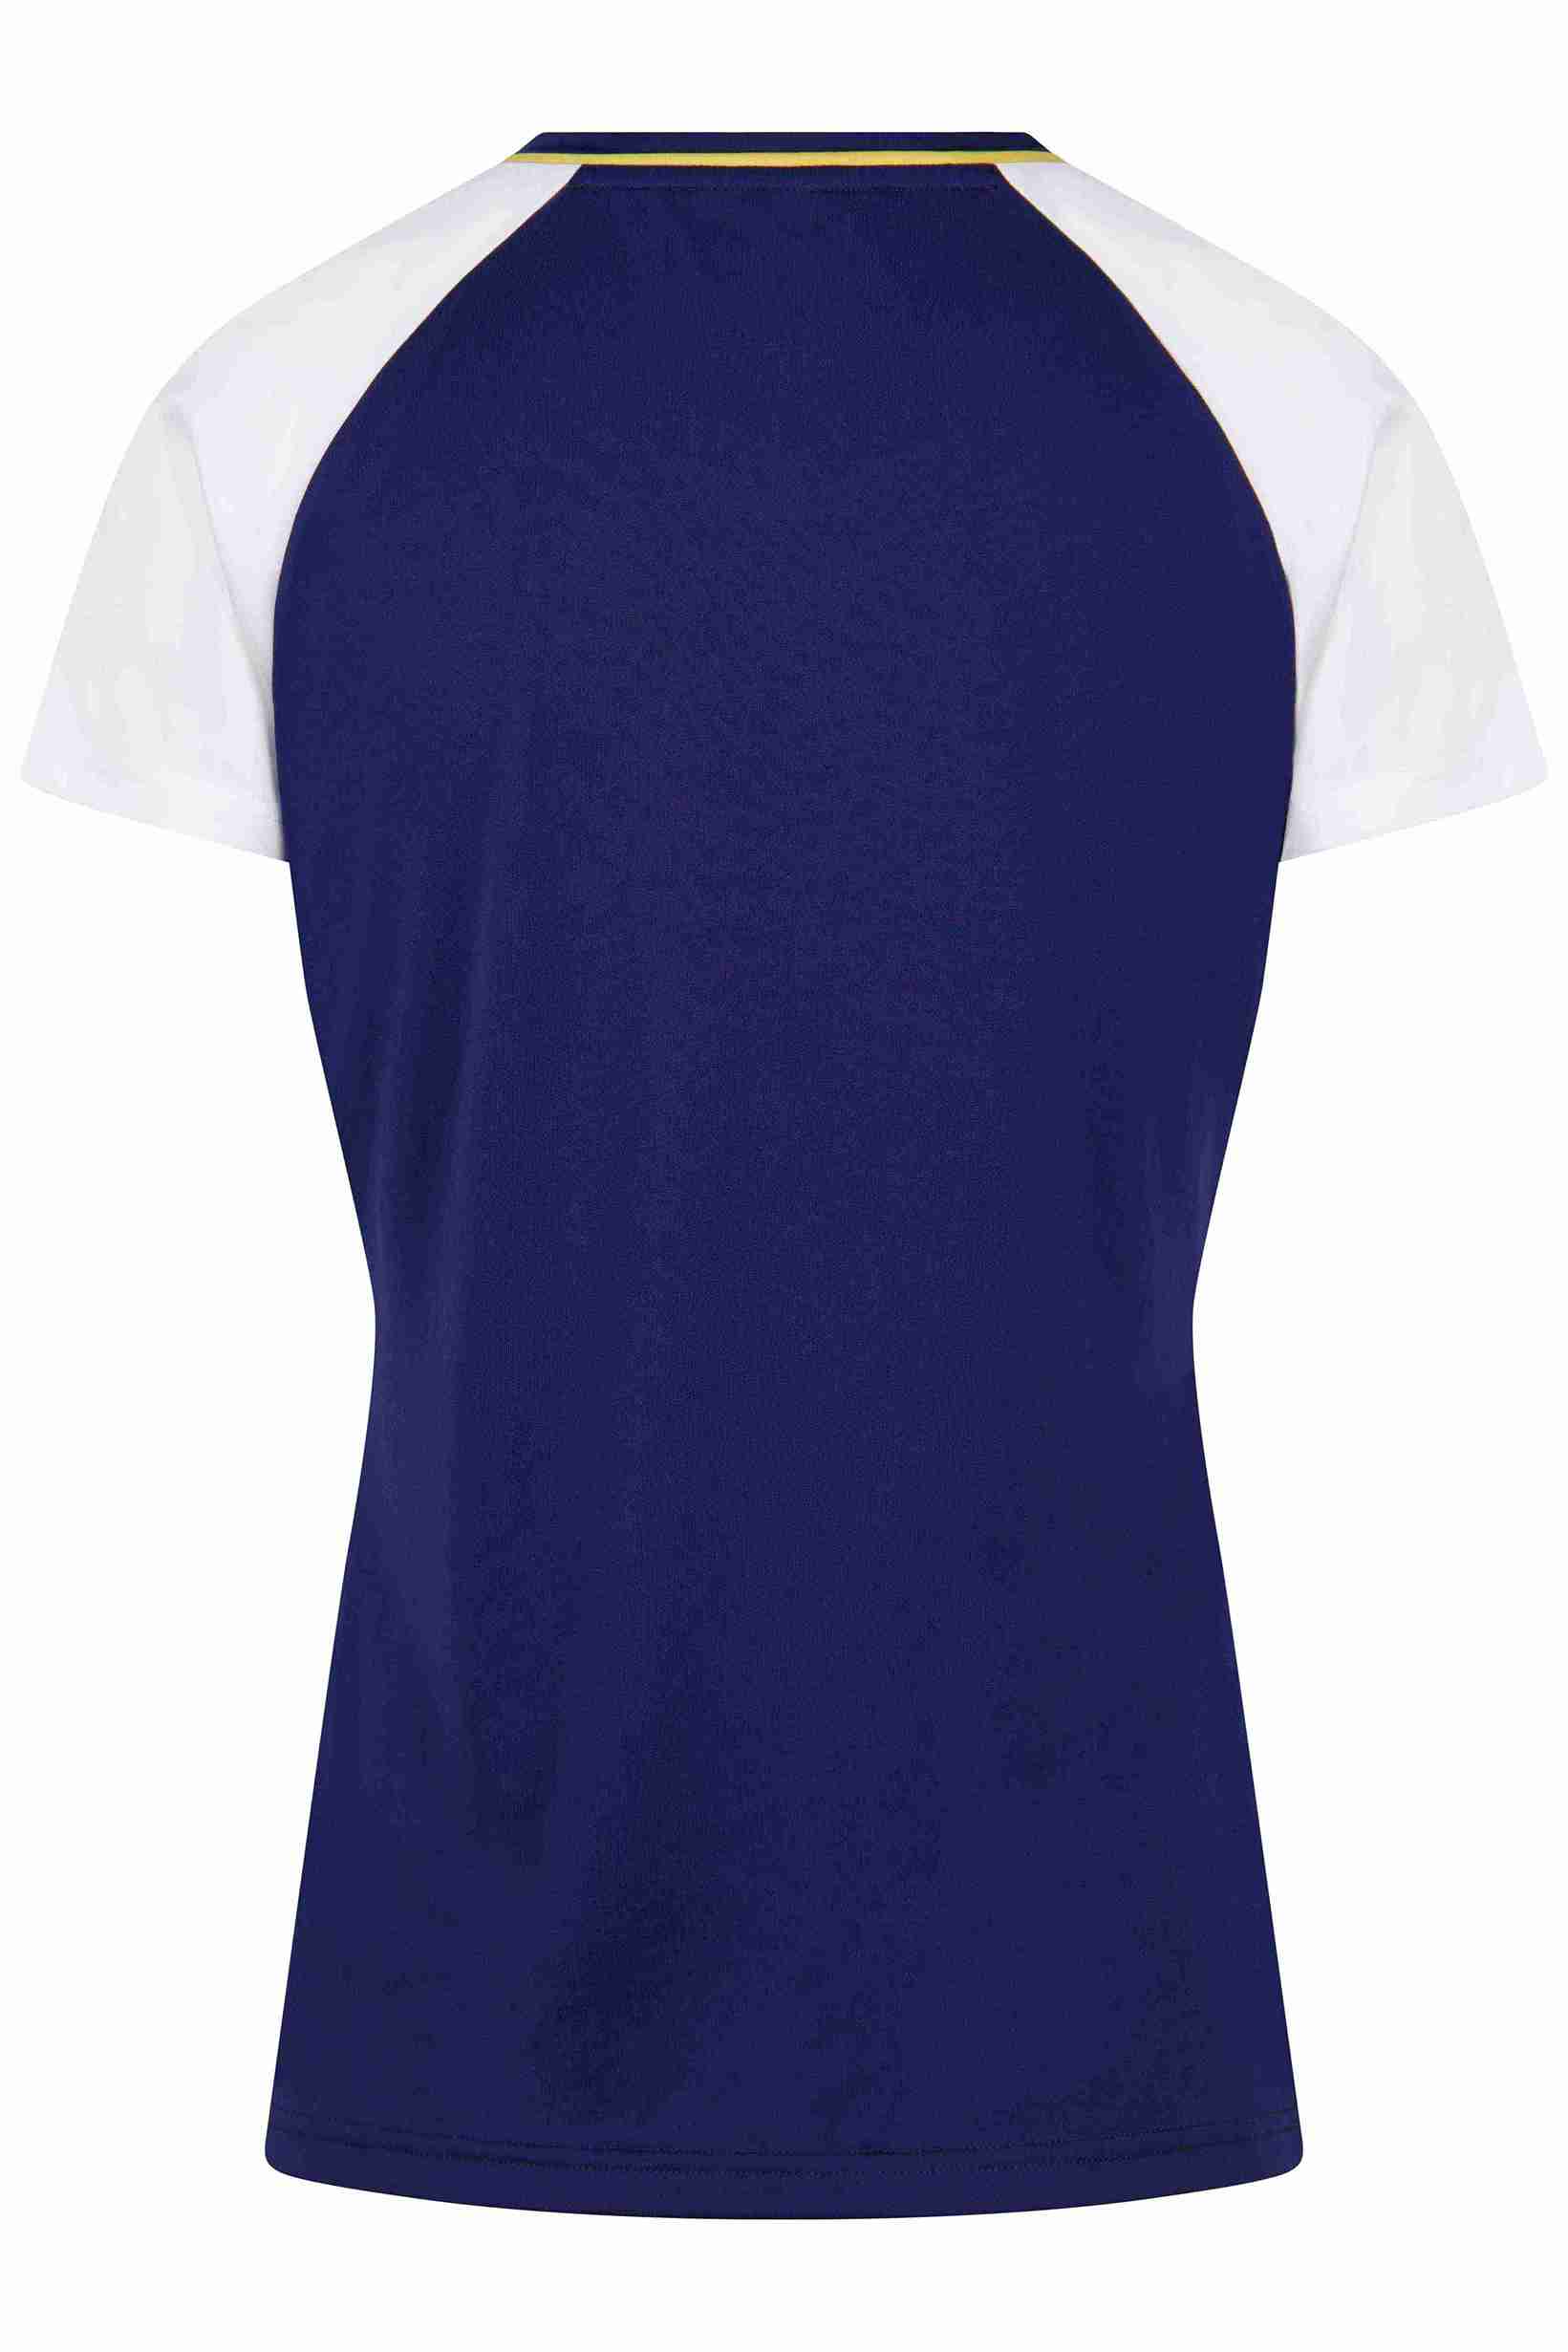 VICTOR T-Shirt T-44100B Women - Blau/Gold XL